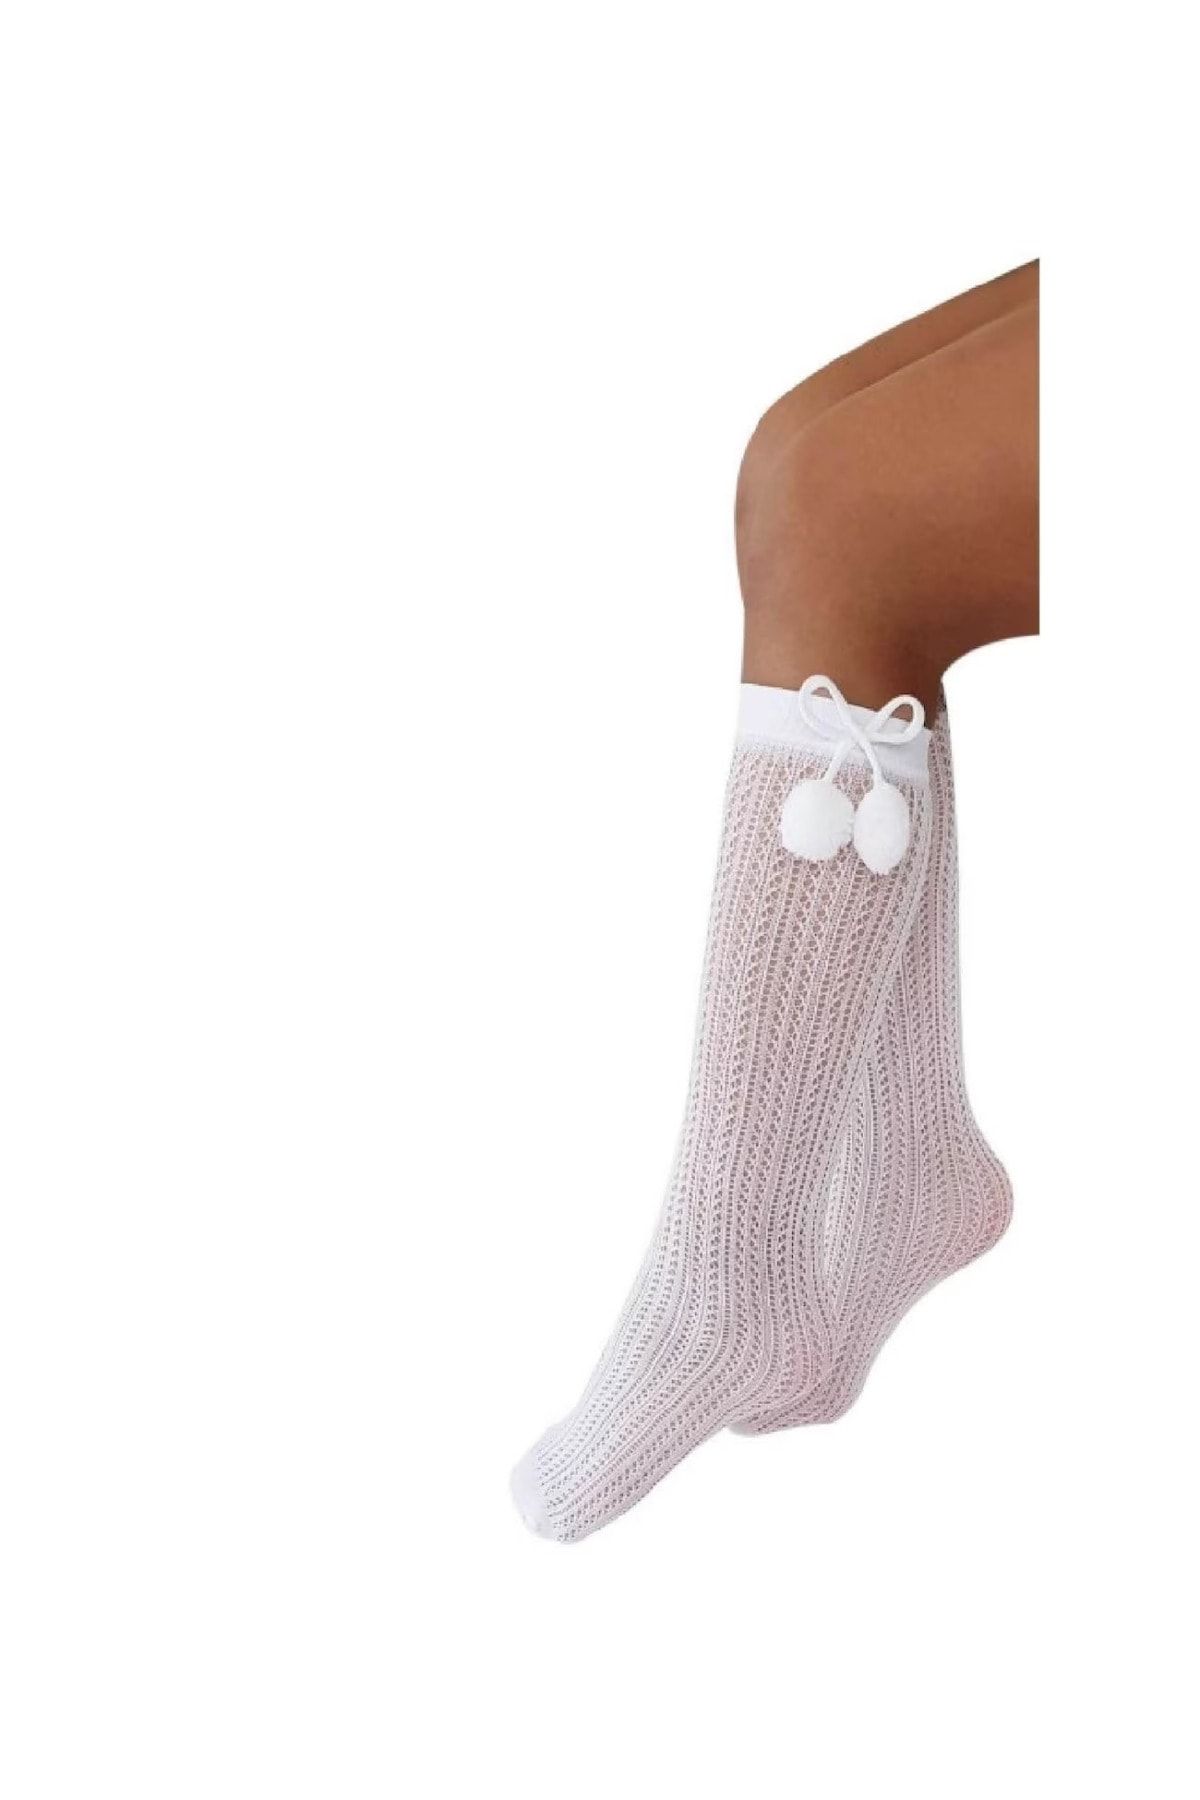 shefox 2 Çift Ponponlu File Dizaltı Kız Çocuk Çorap Seti By Daymod